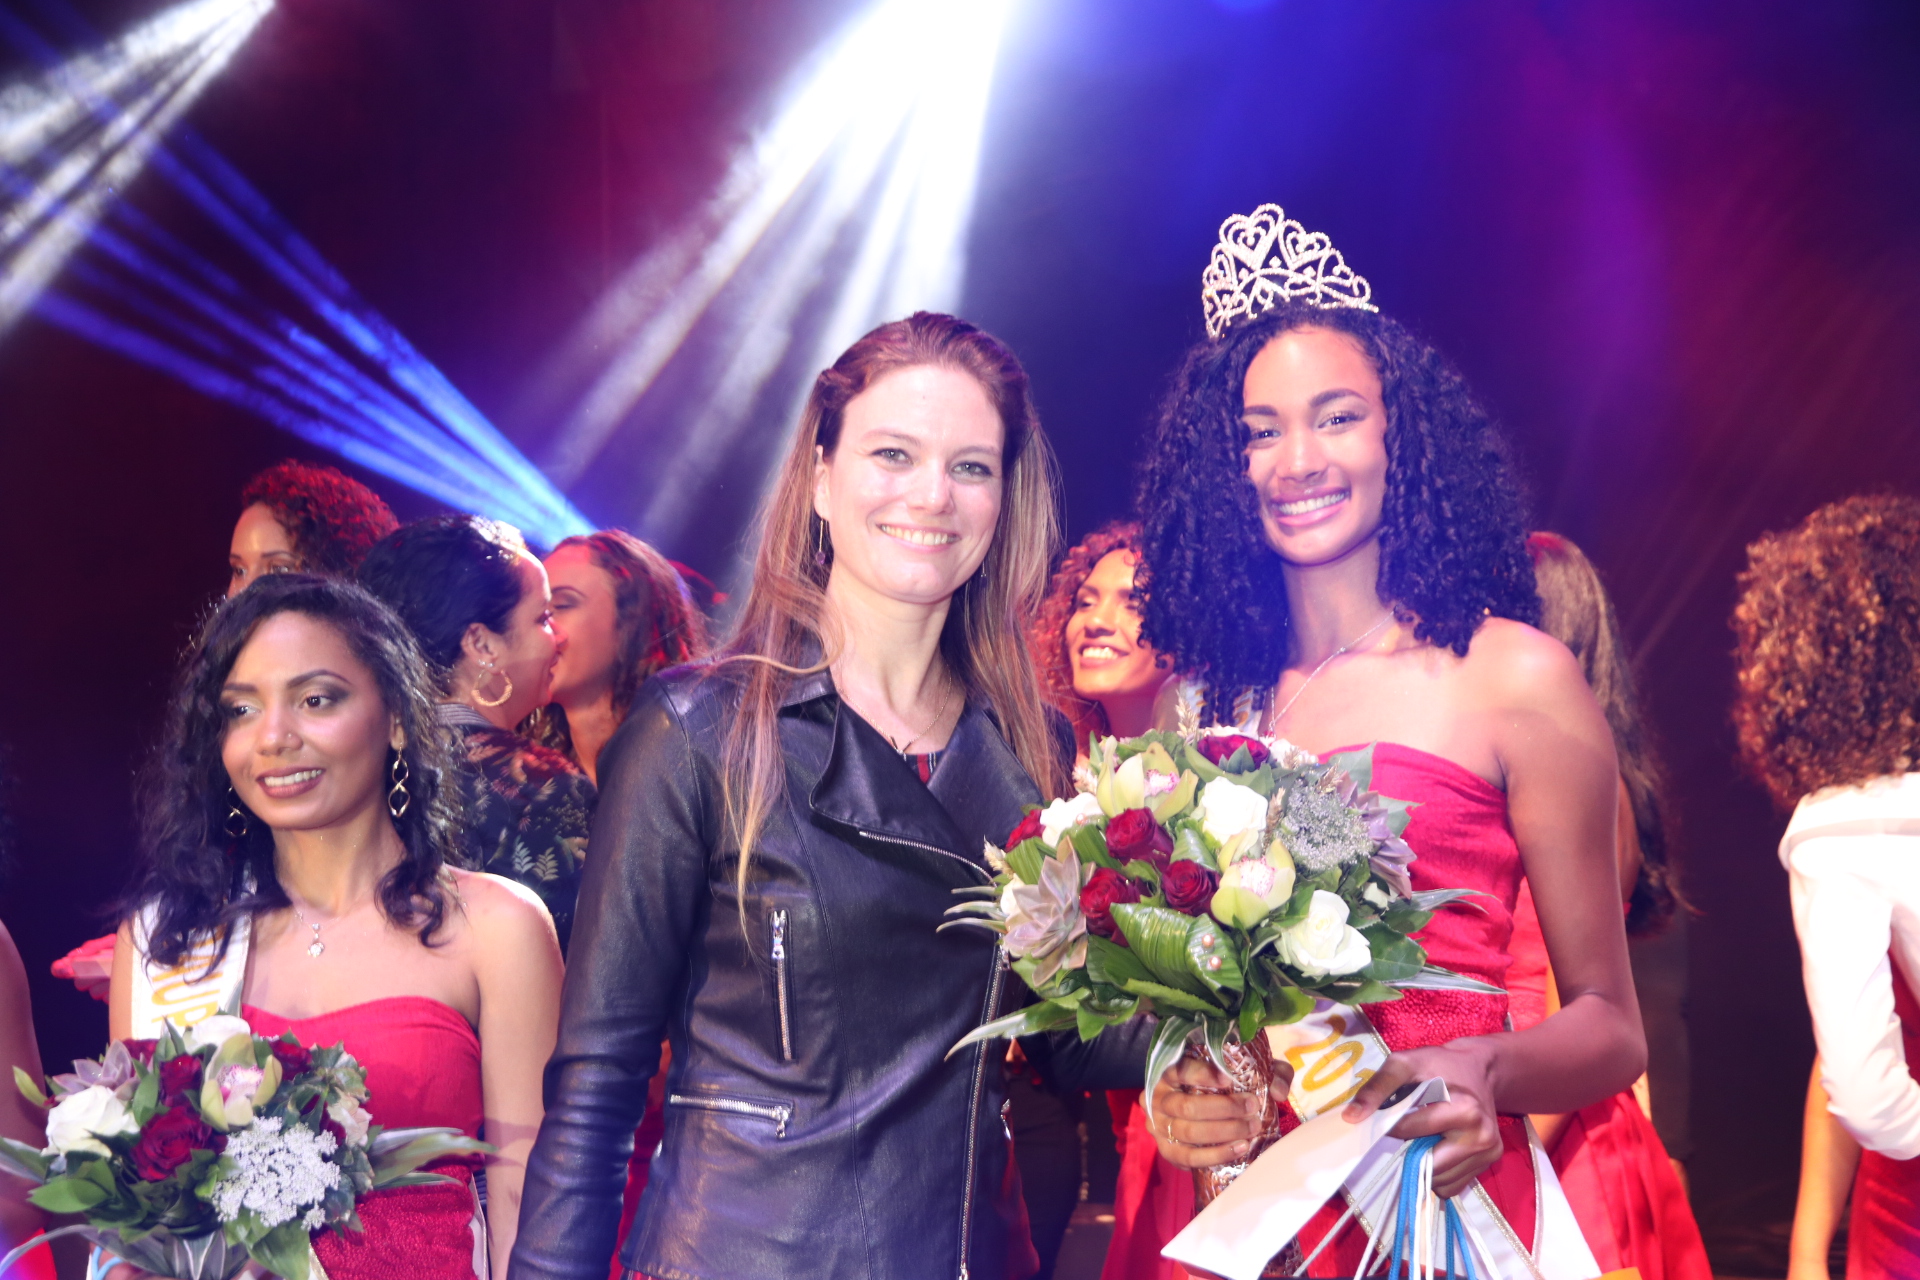 Miss Saint-Paul 2019: Mélanie Odules élue